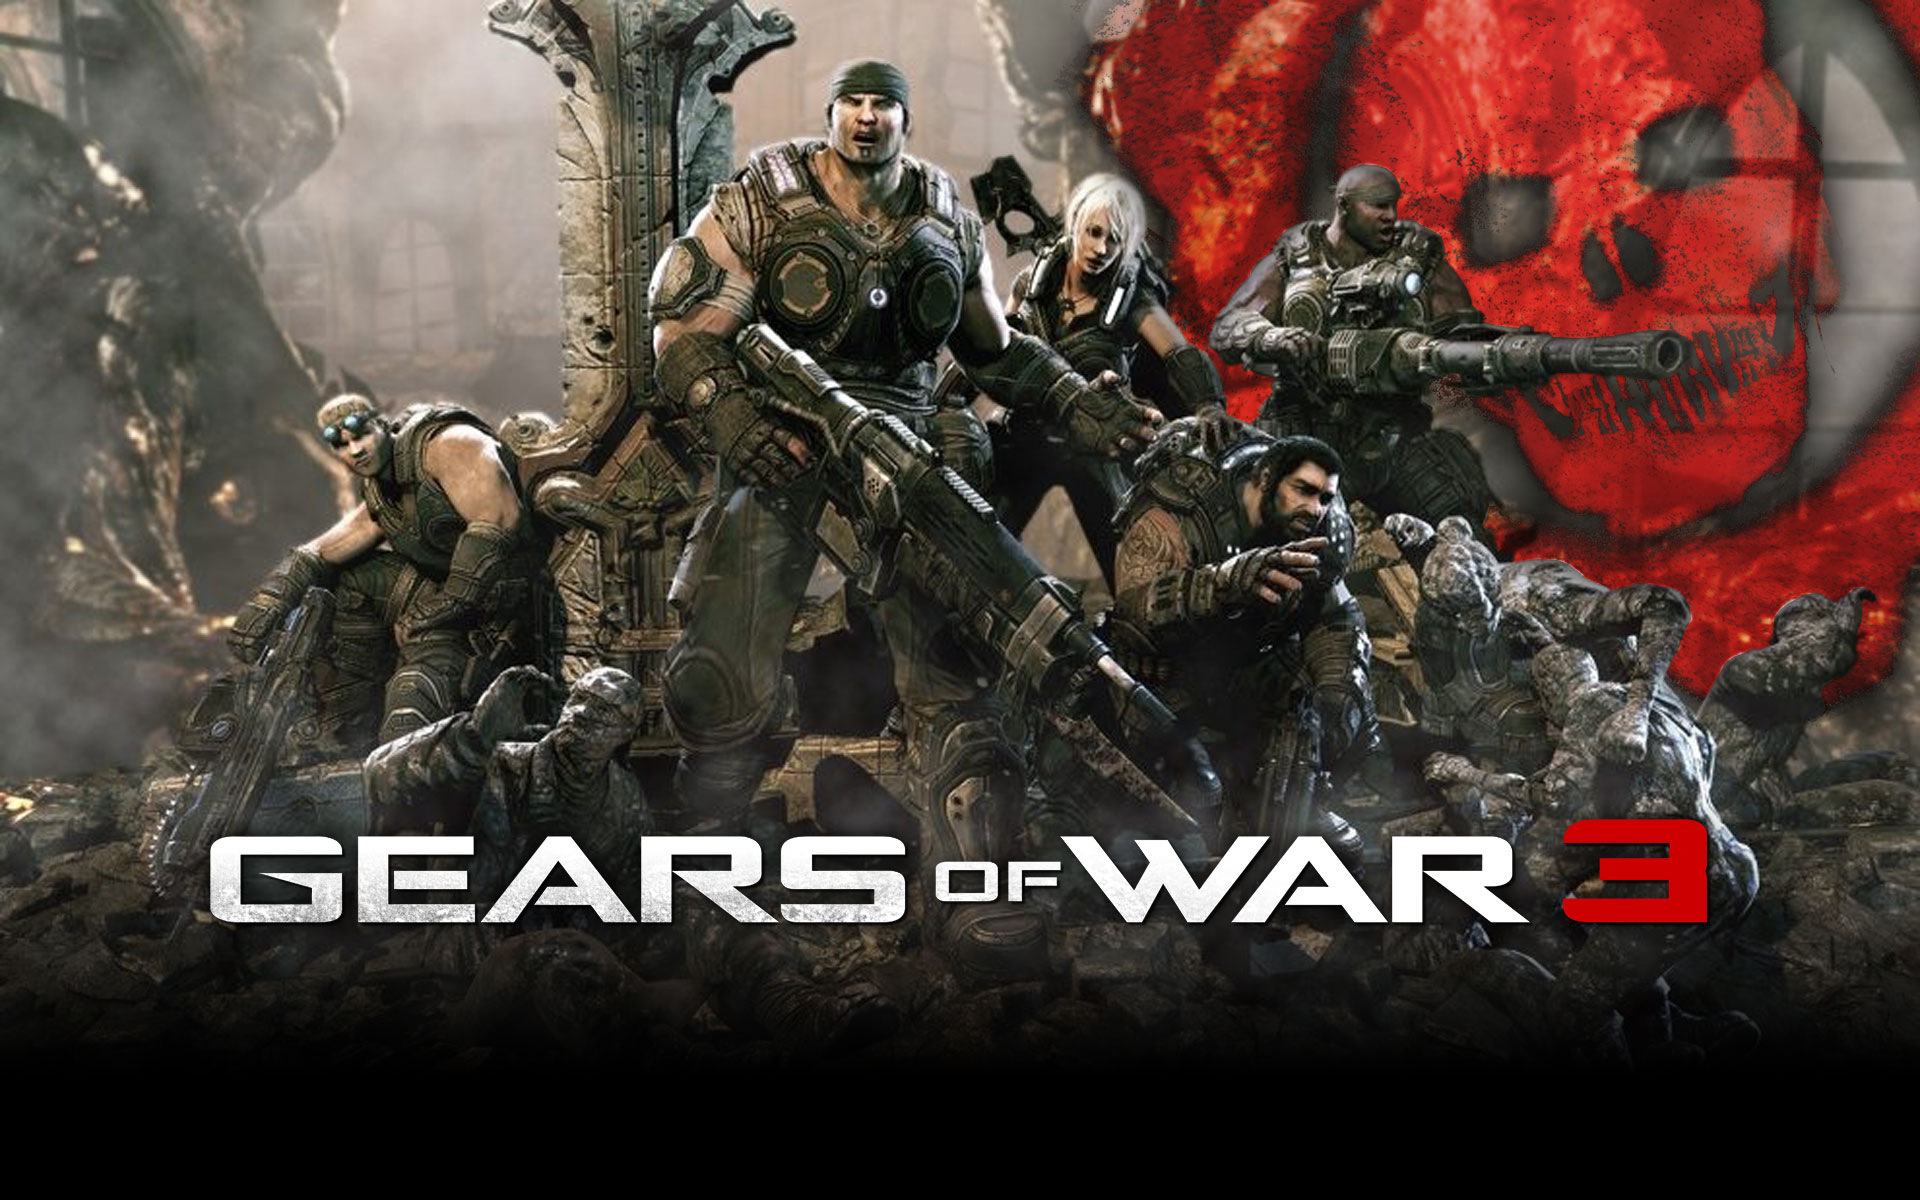 Gear Of War 3 All Cut Scenes Full HD 1080 